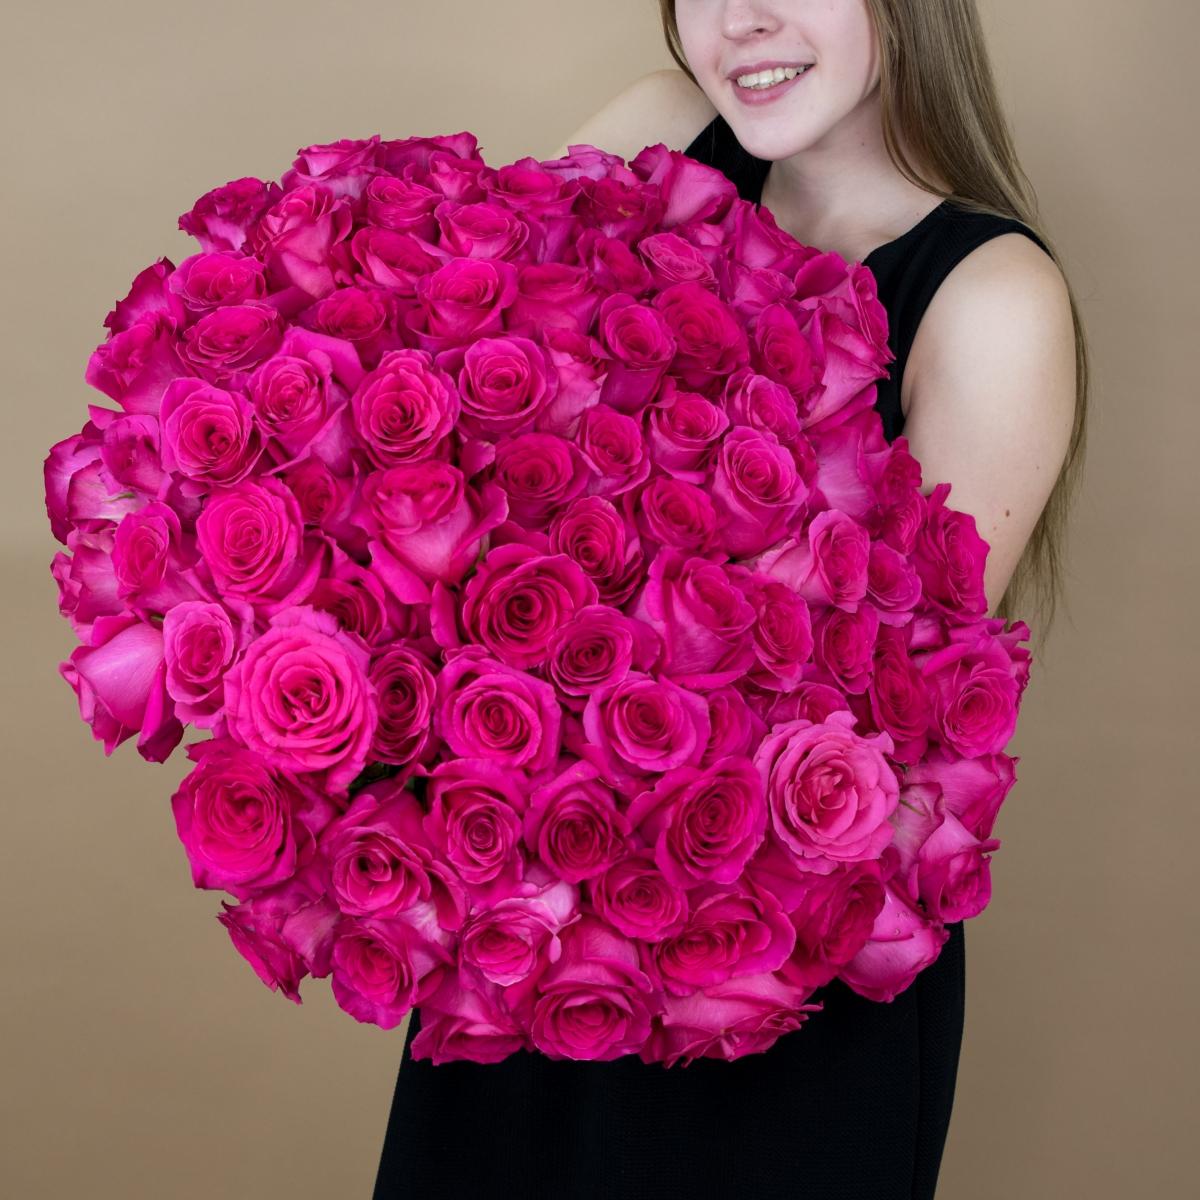 Букет из розовых роз 75 шт. (40 см) (артикул букета: 87318)